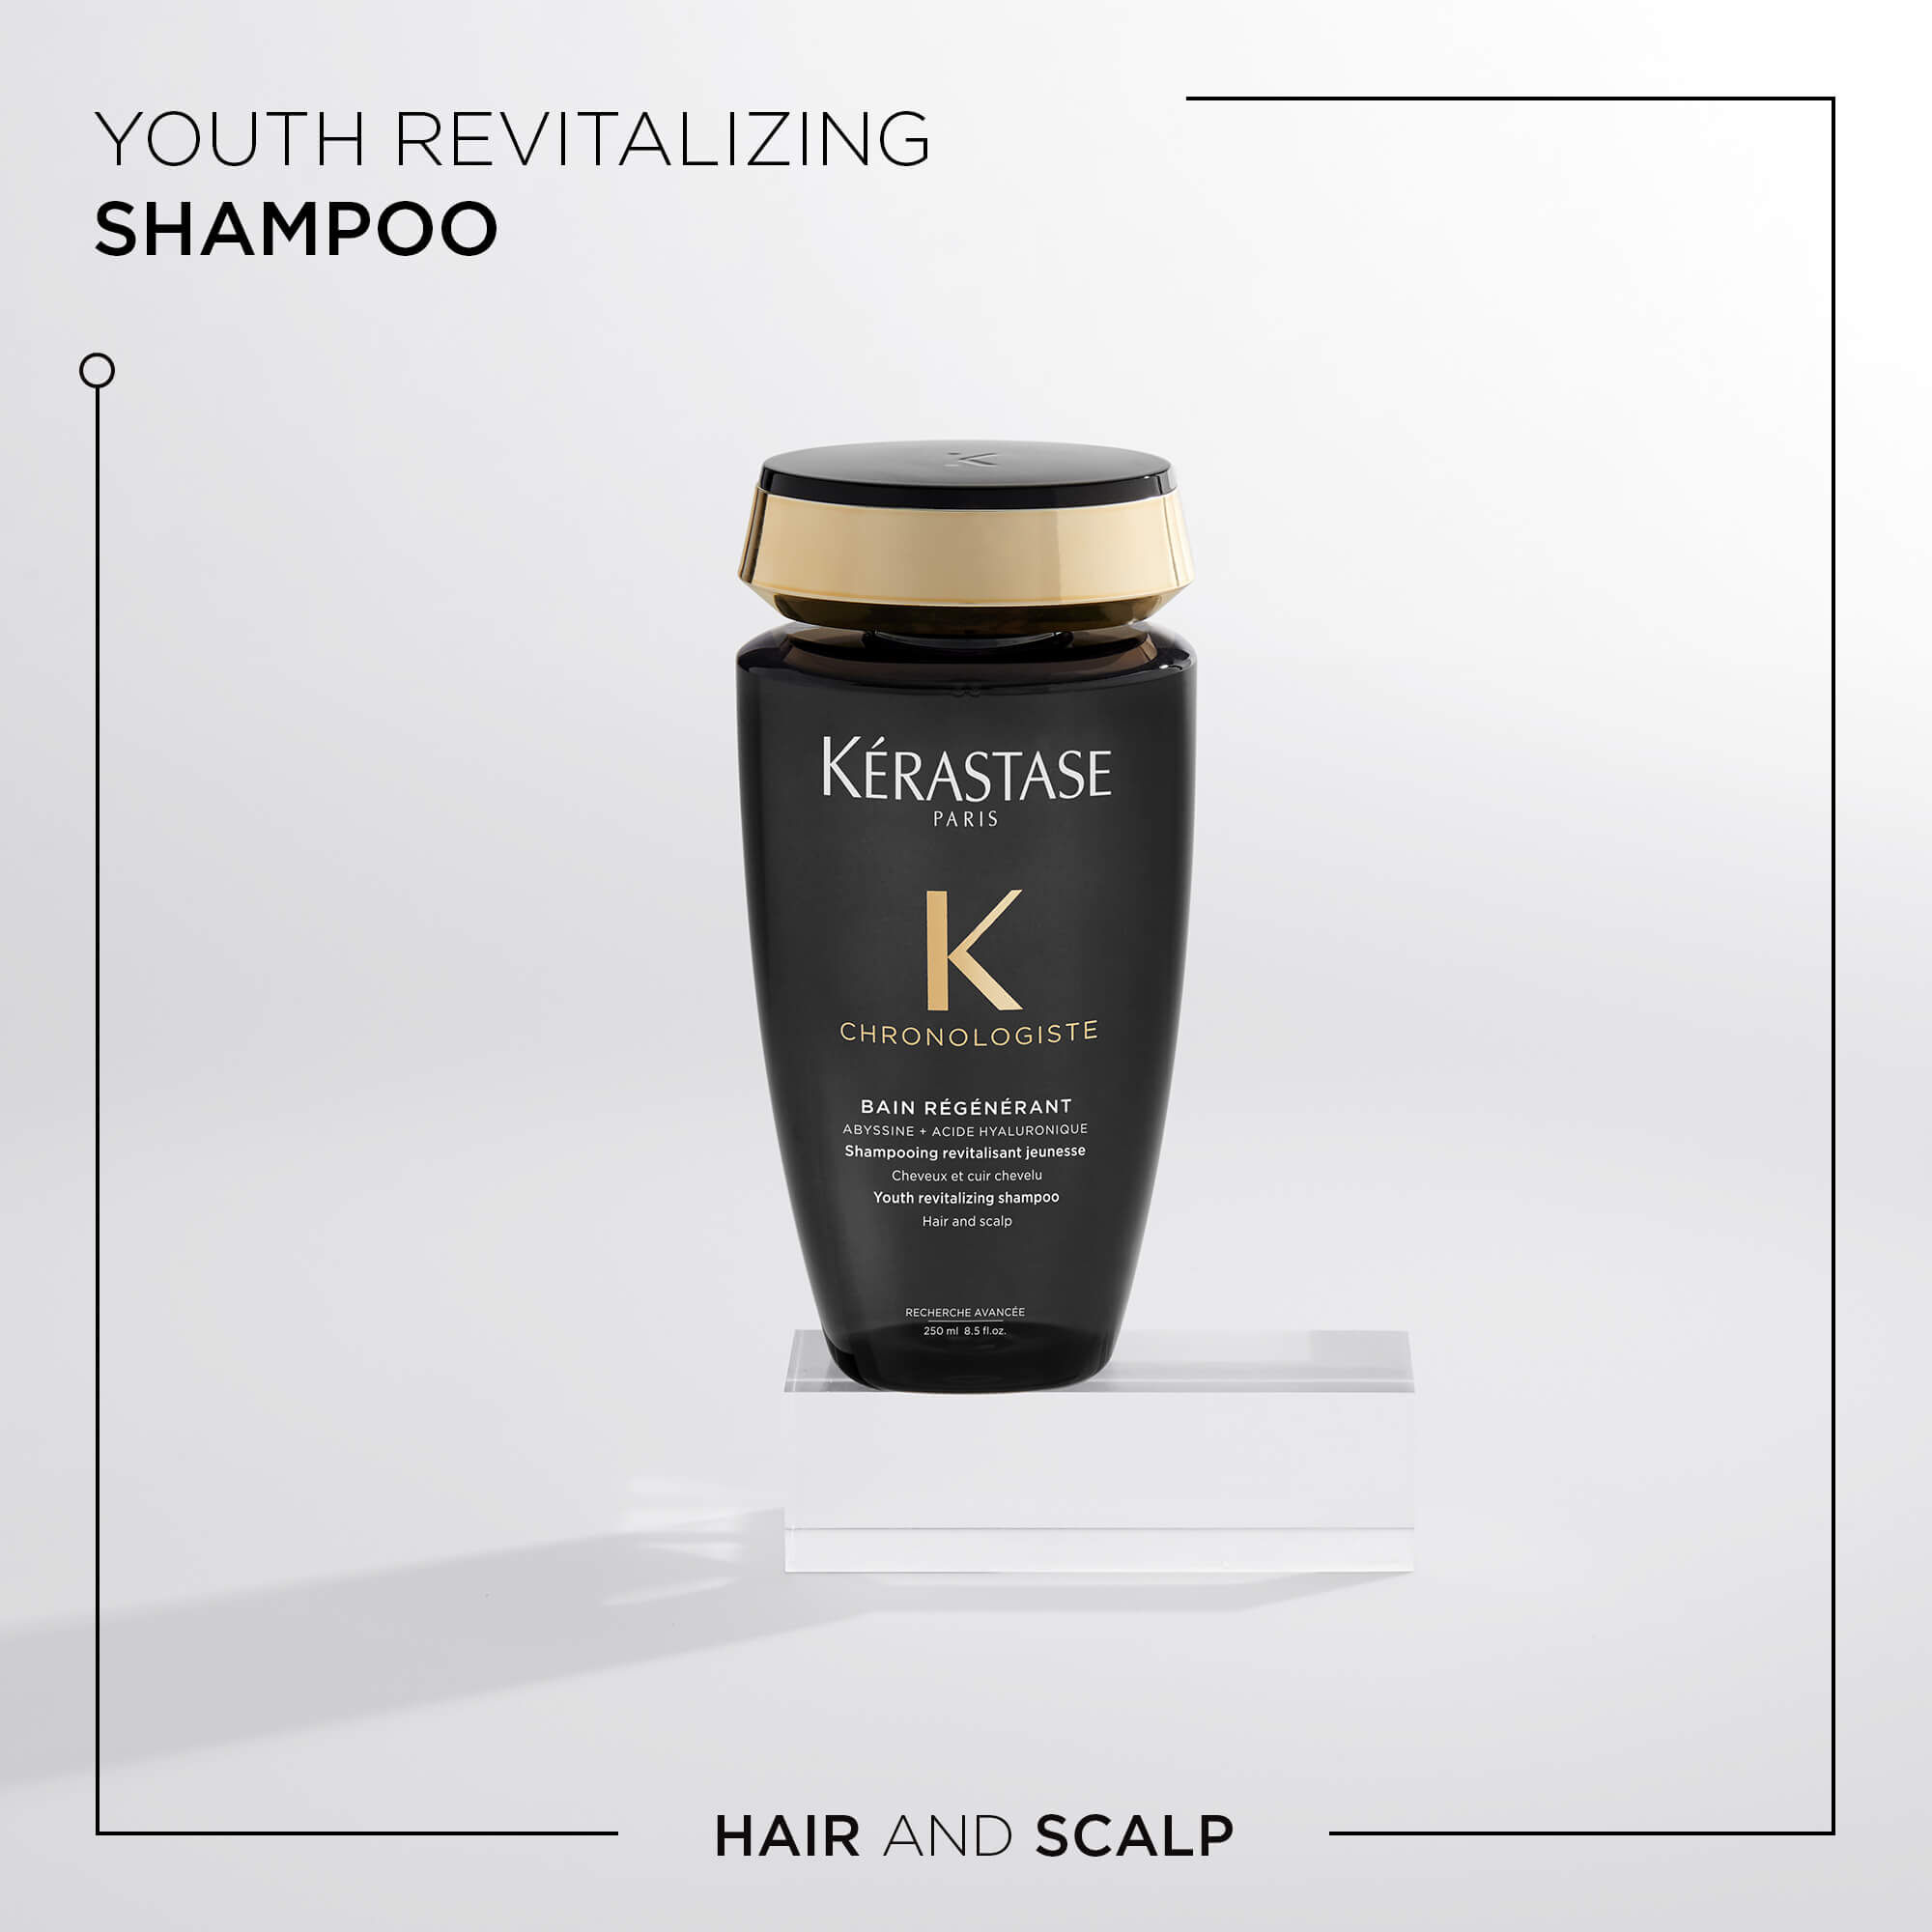 Kerastase Top 5 Shampoos  Kerastase Review  Best High End Shampoos  Best  Professional Shampoo  YouTube